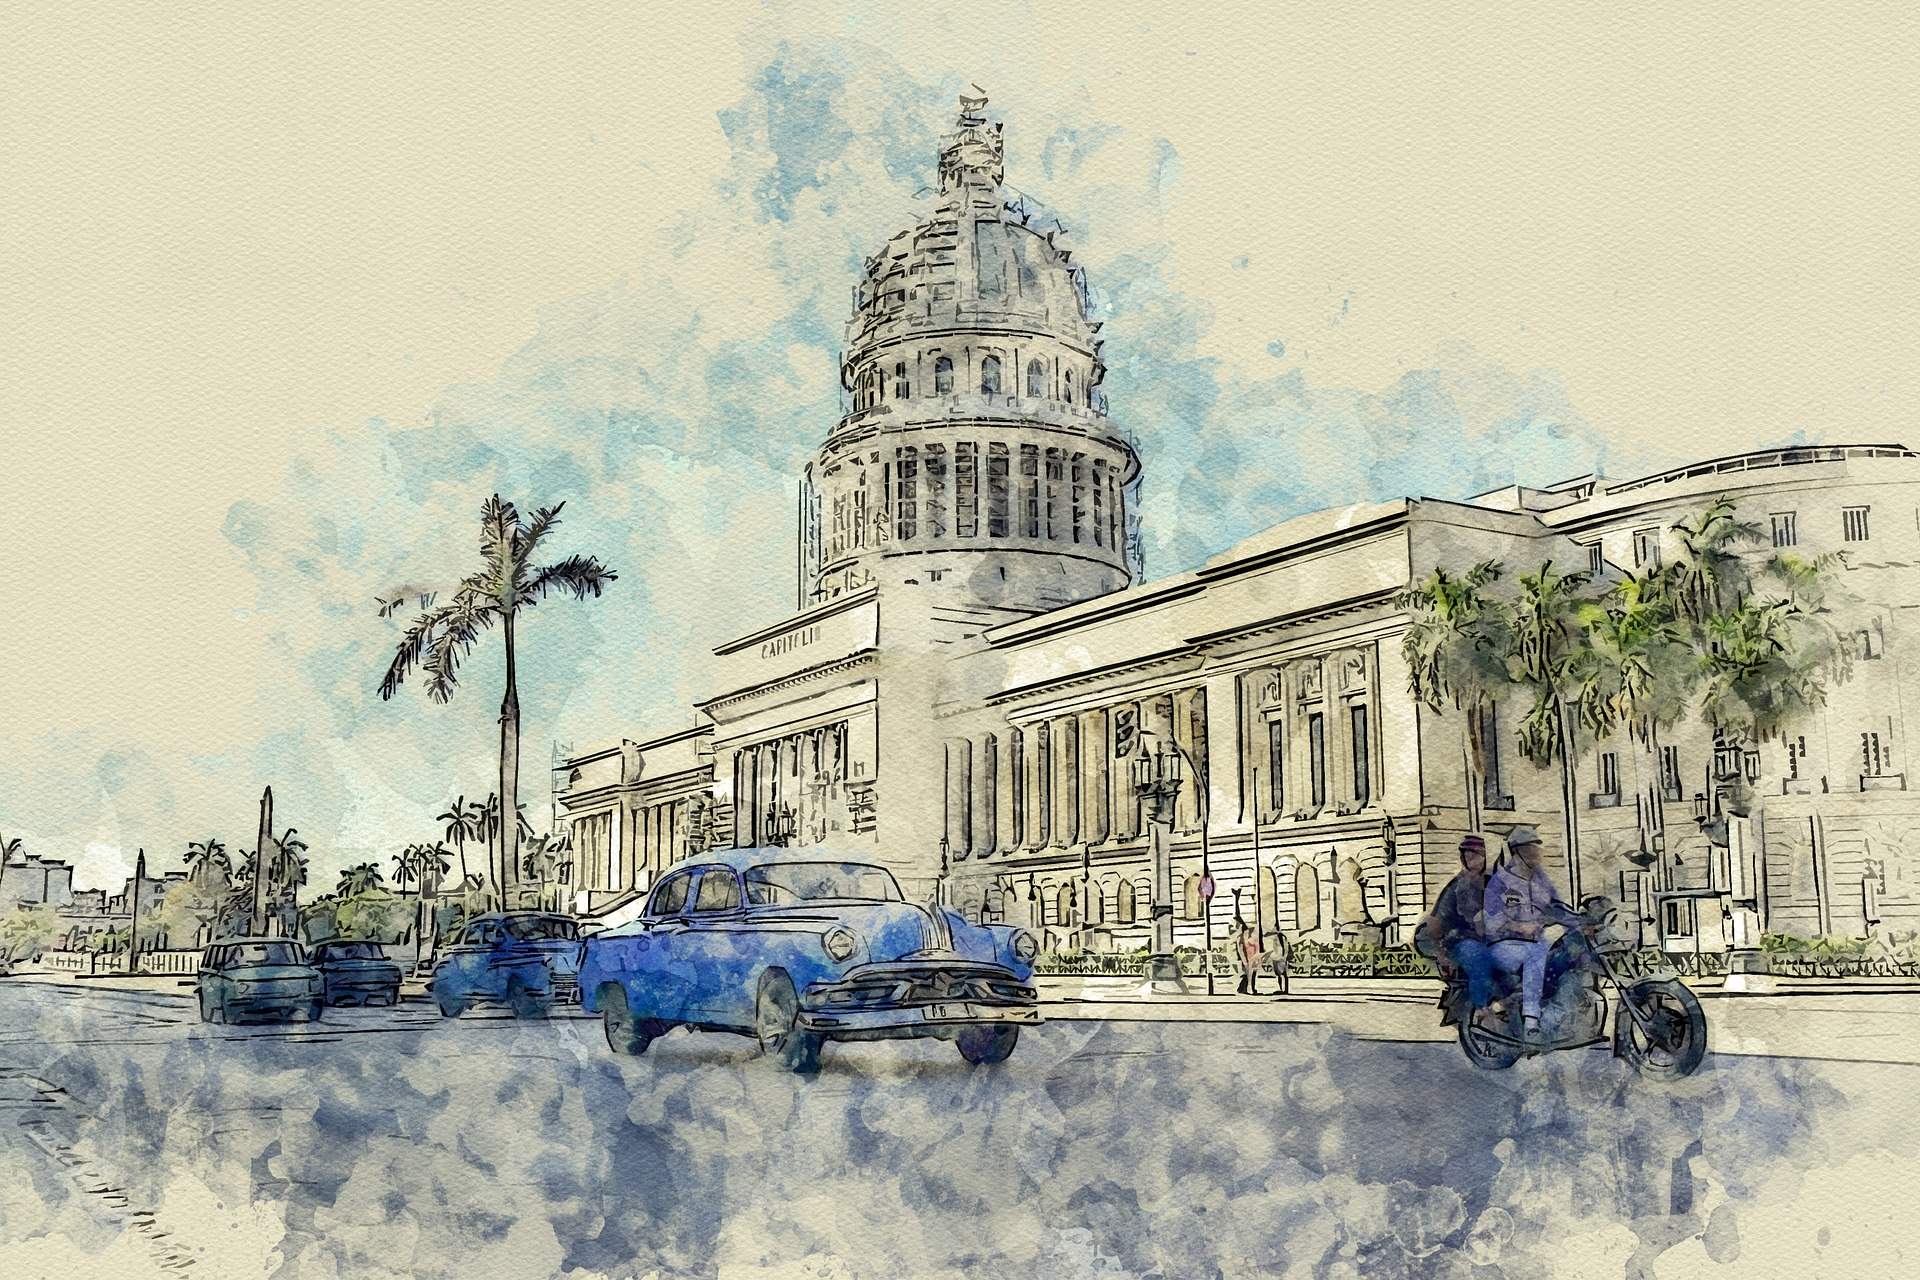 Cuba, Havana where Havana Syndrome seems to have started